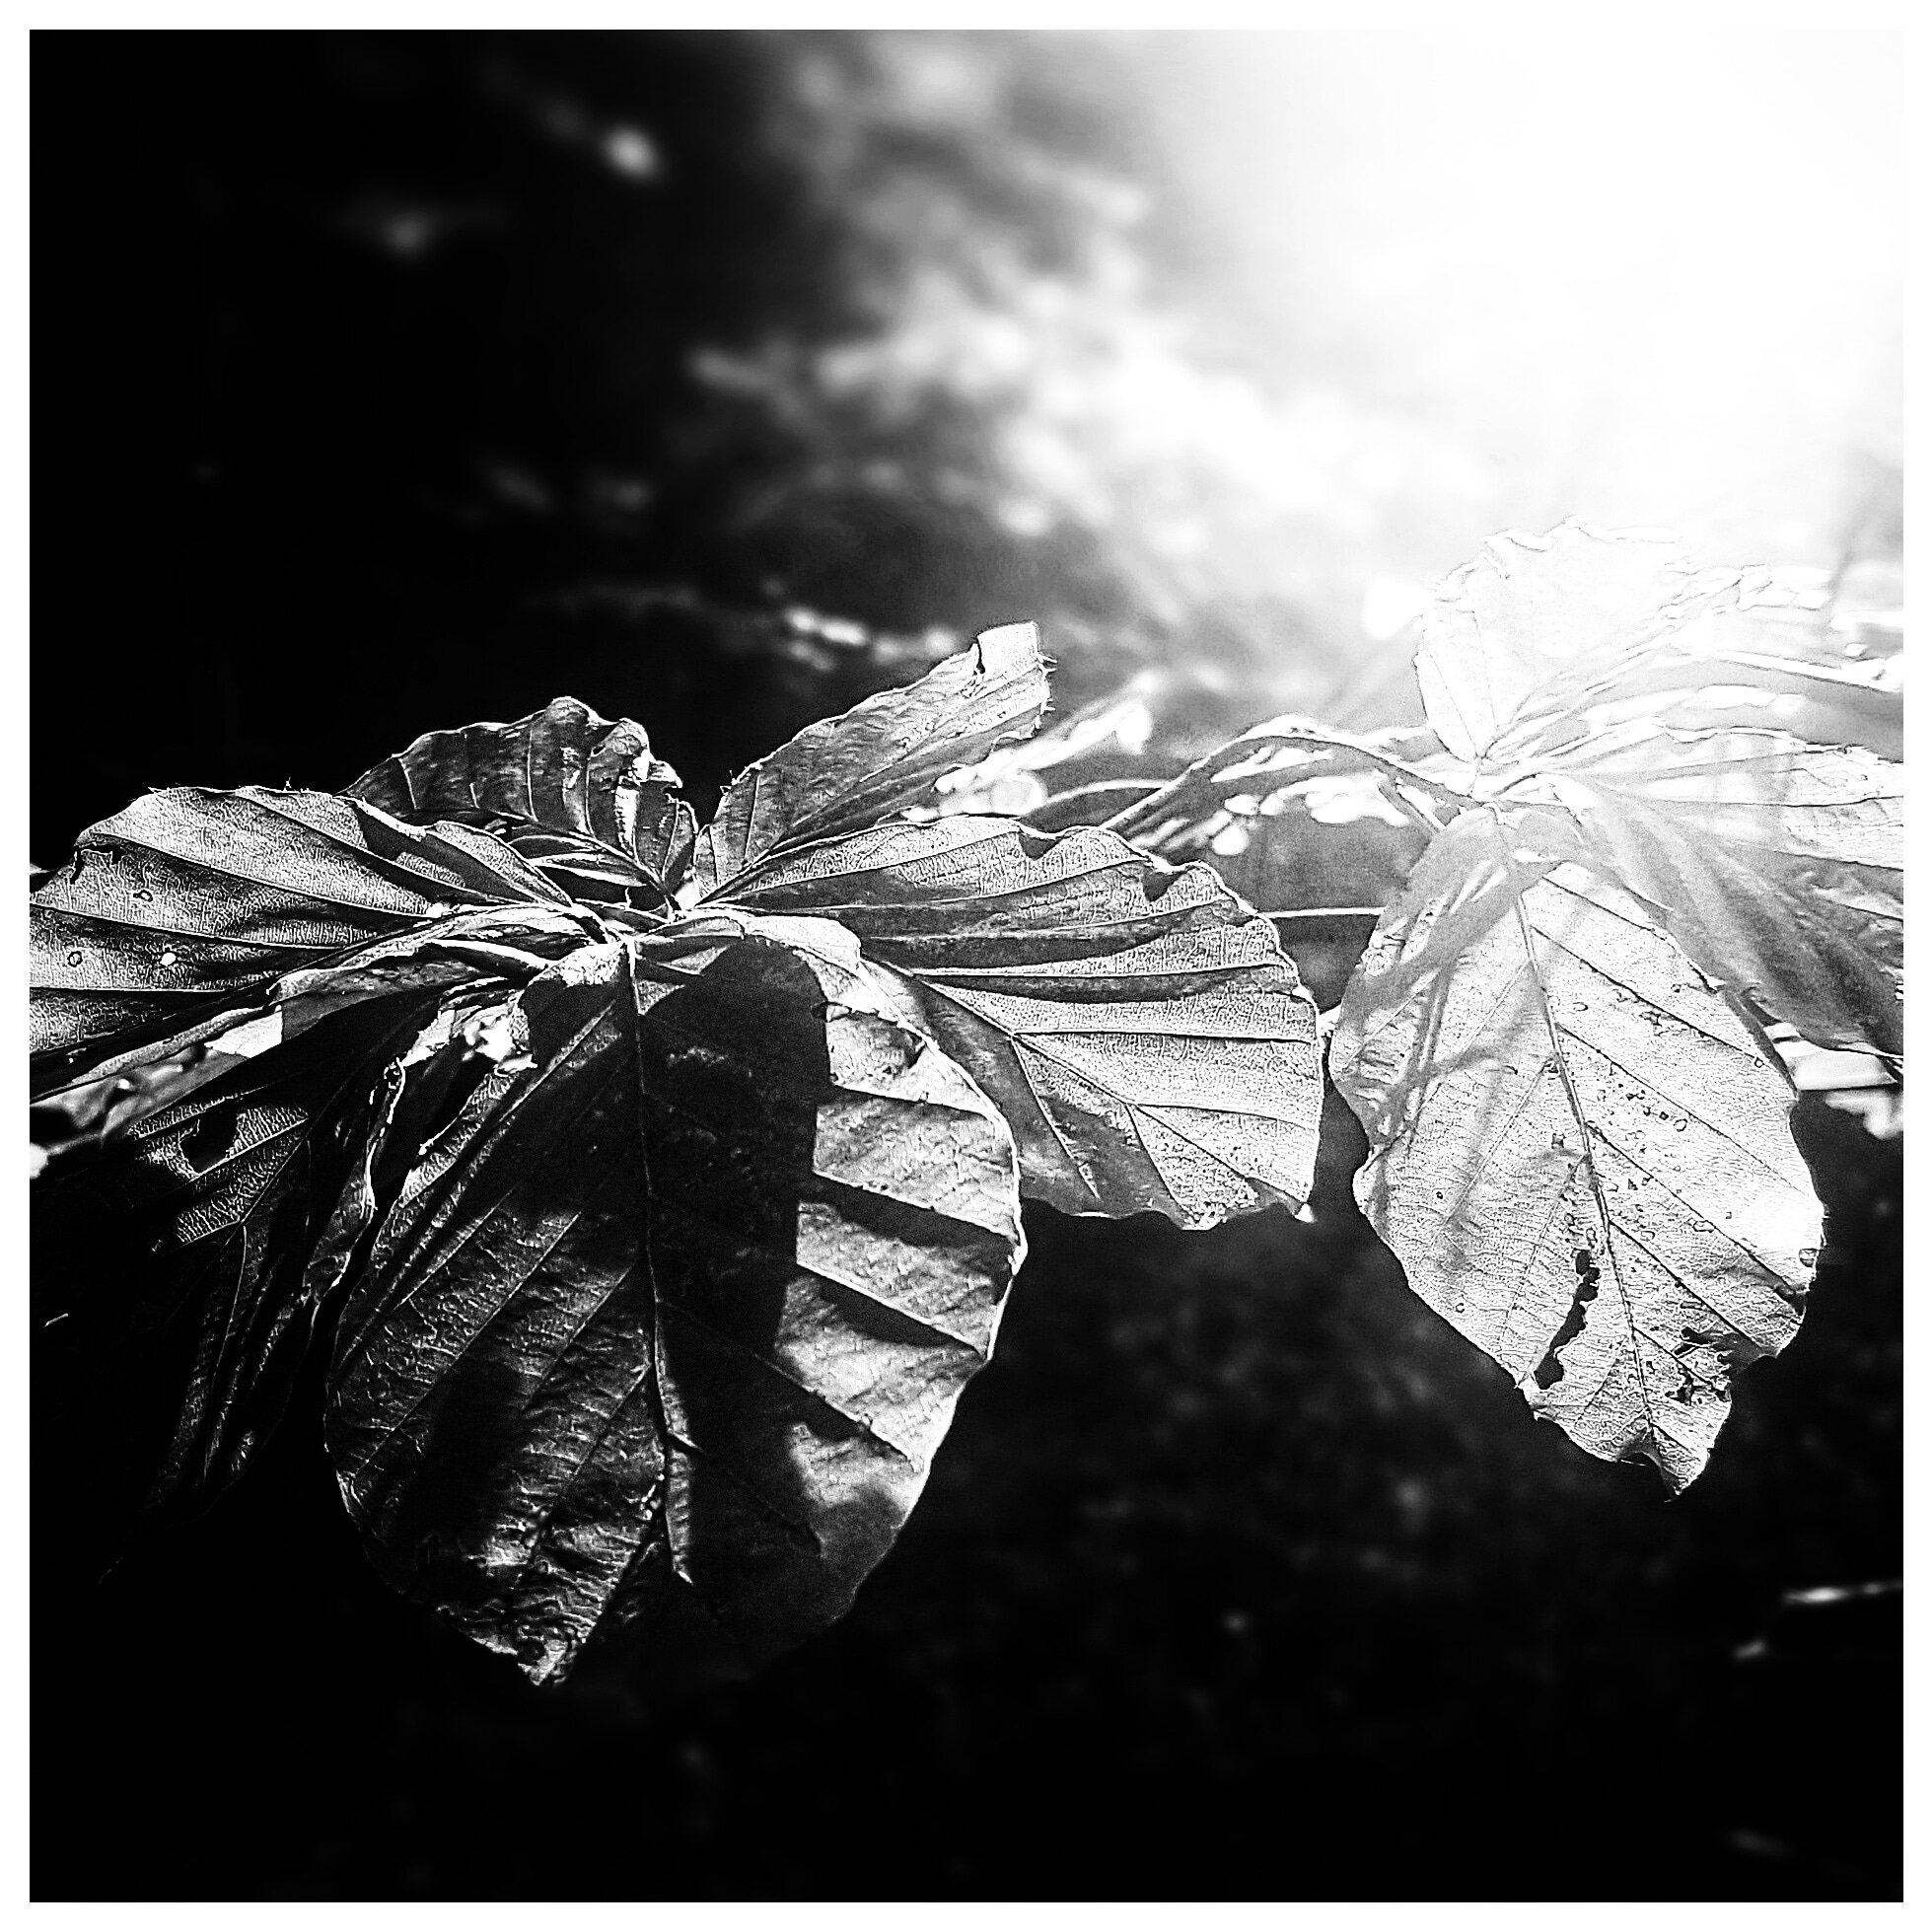 Day 267 - September 24: Leaves in the sun